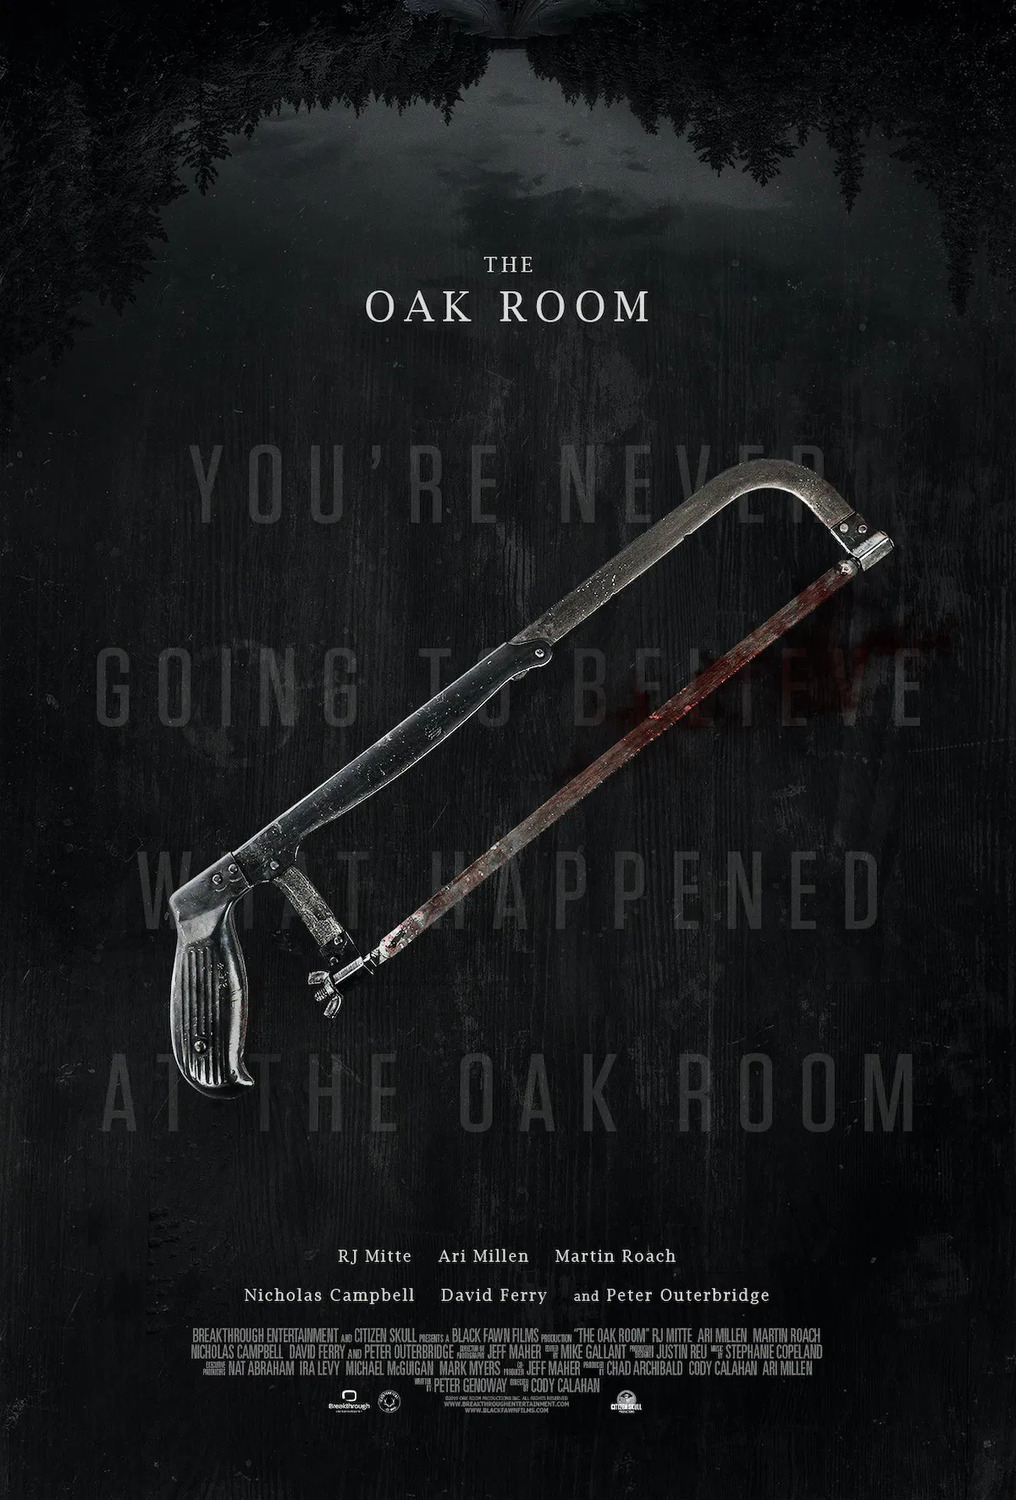 Nonton film The Oak Room layarkaca21 indoxx1 ganool online streaming terbaru